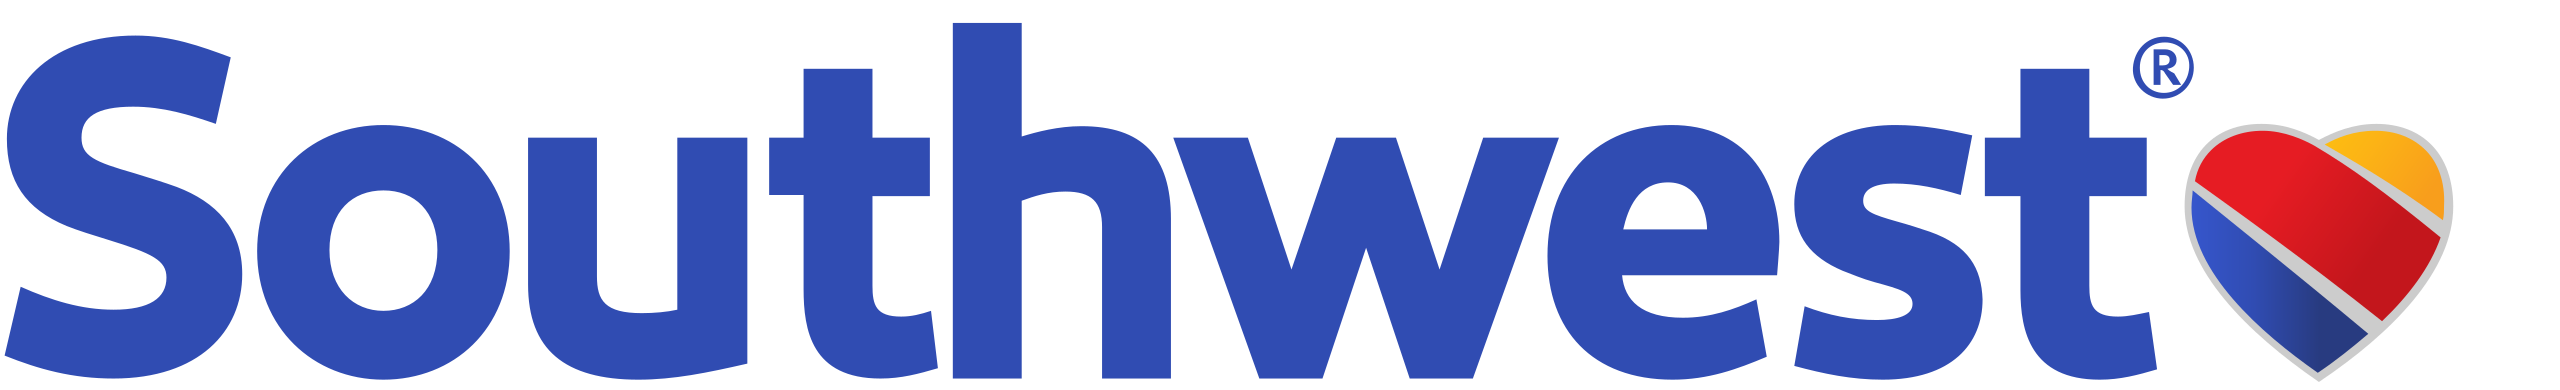 2560px-Southwest_Airlines_logo_2014.svg-2